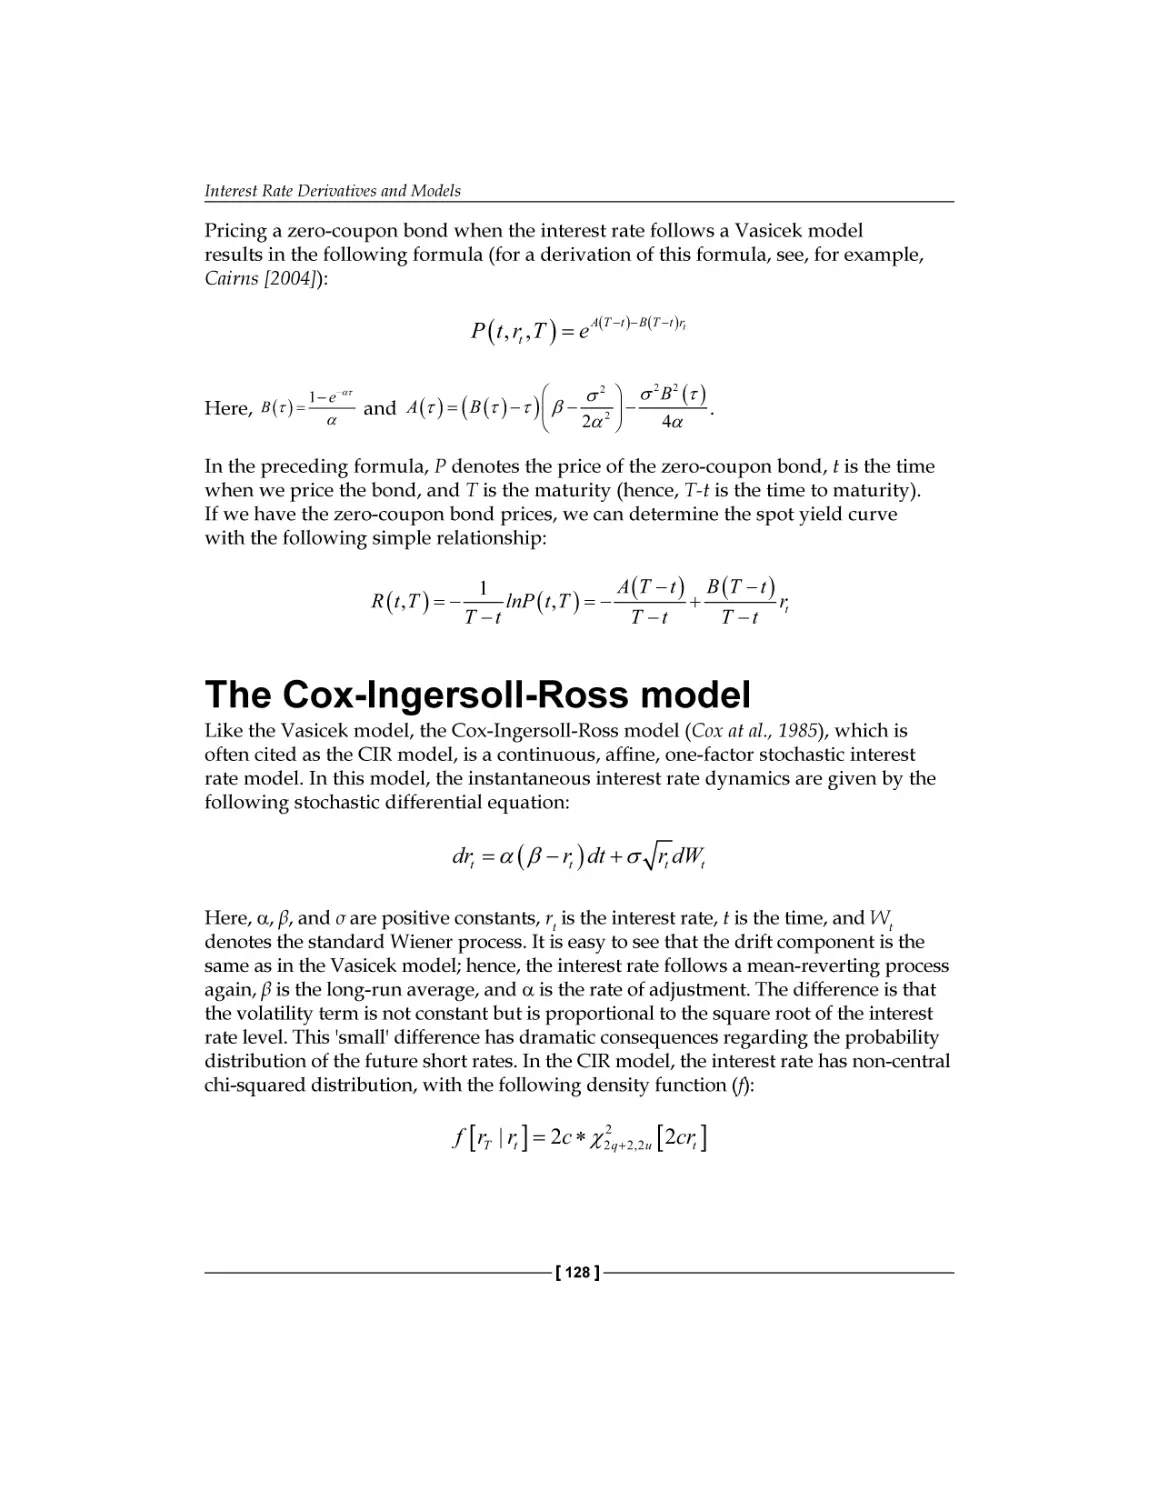 The Cox-Ingersoll-Ross model